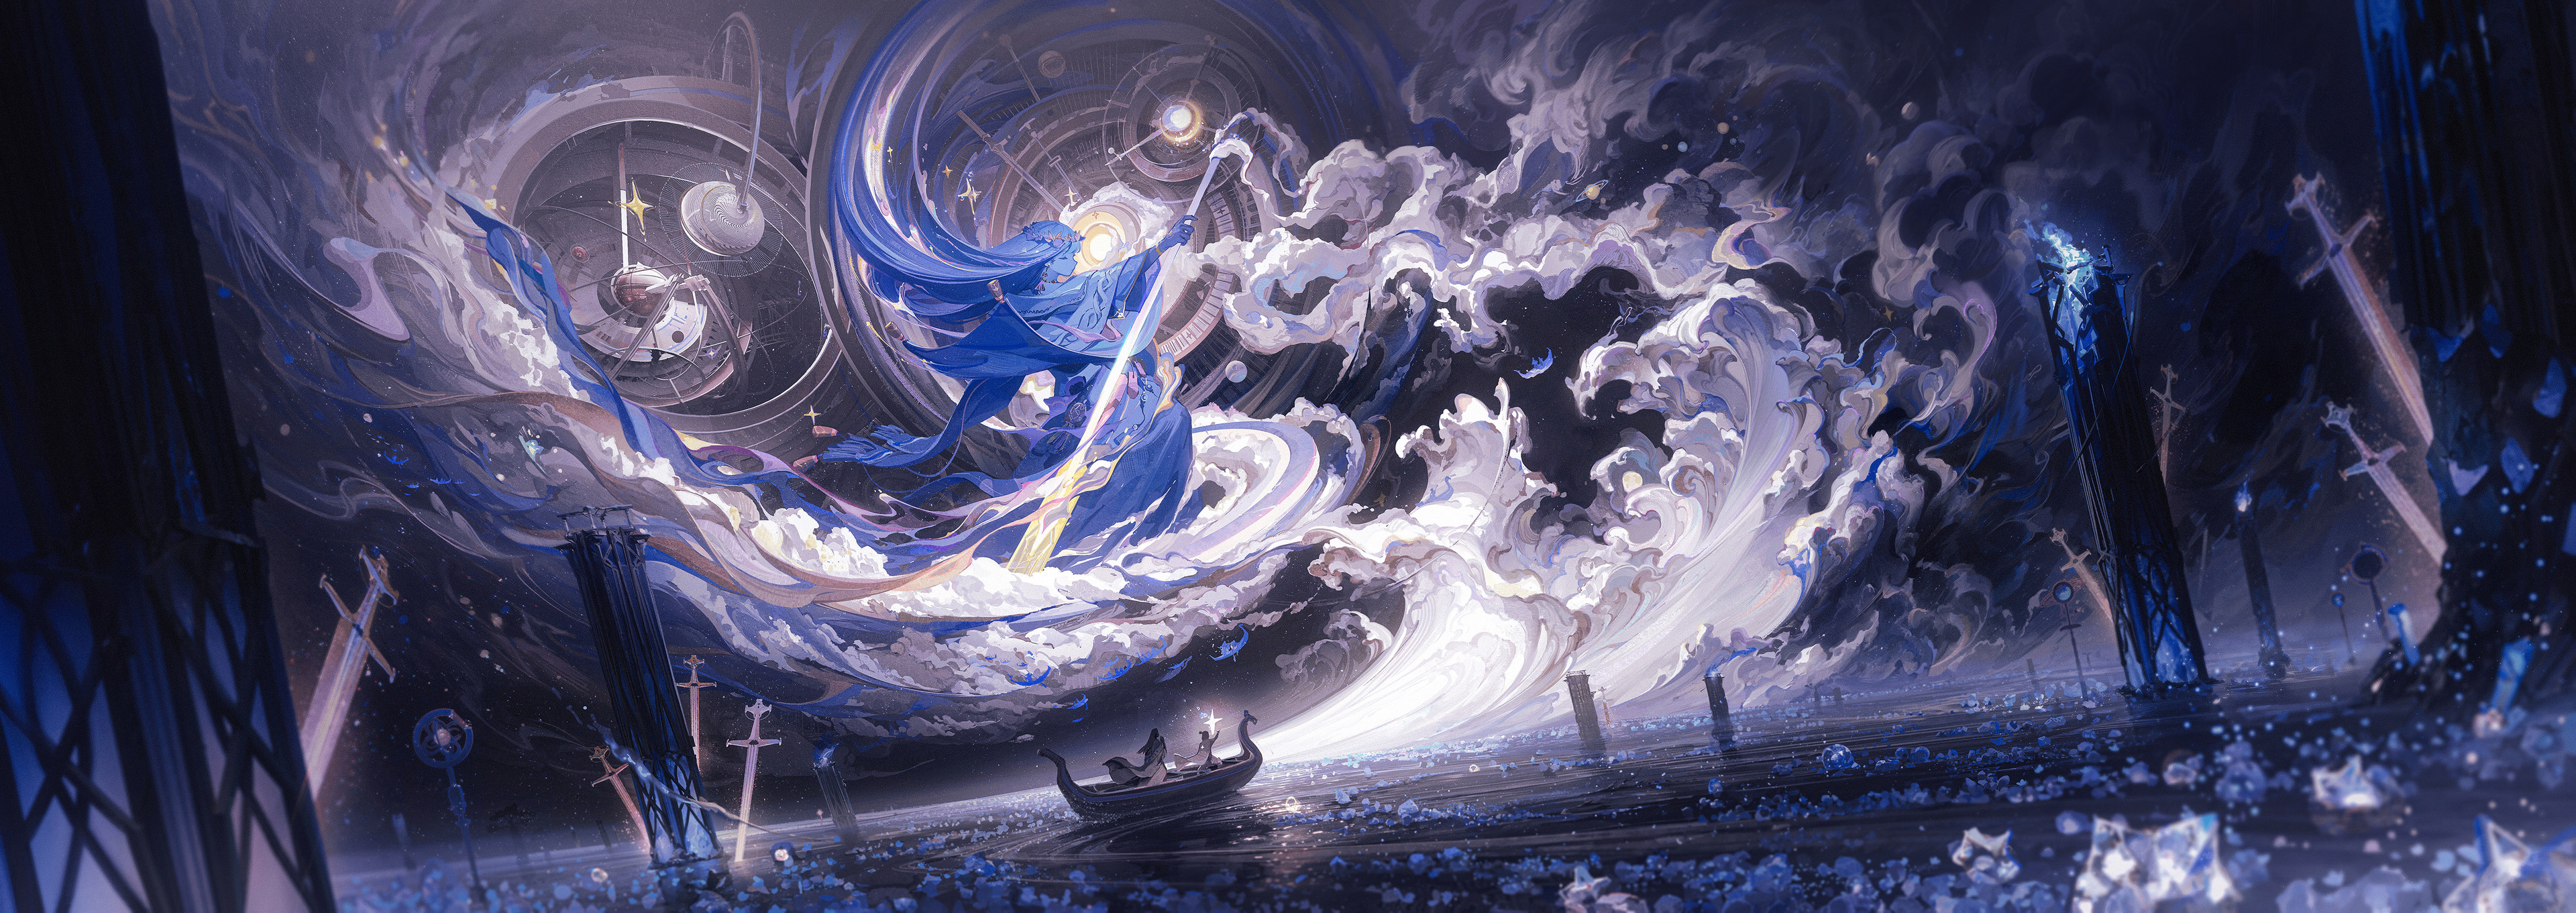 Ying Yi Sky Night Night Sky Oar Dress Chinese Clothing Boat Clouds Sea Stars Silhouette Gears Crysta 3840x1361